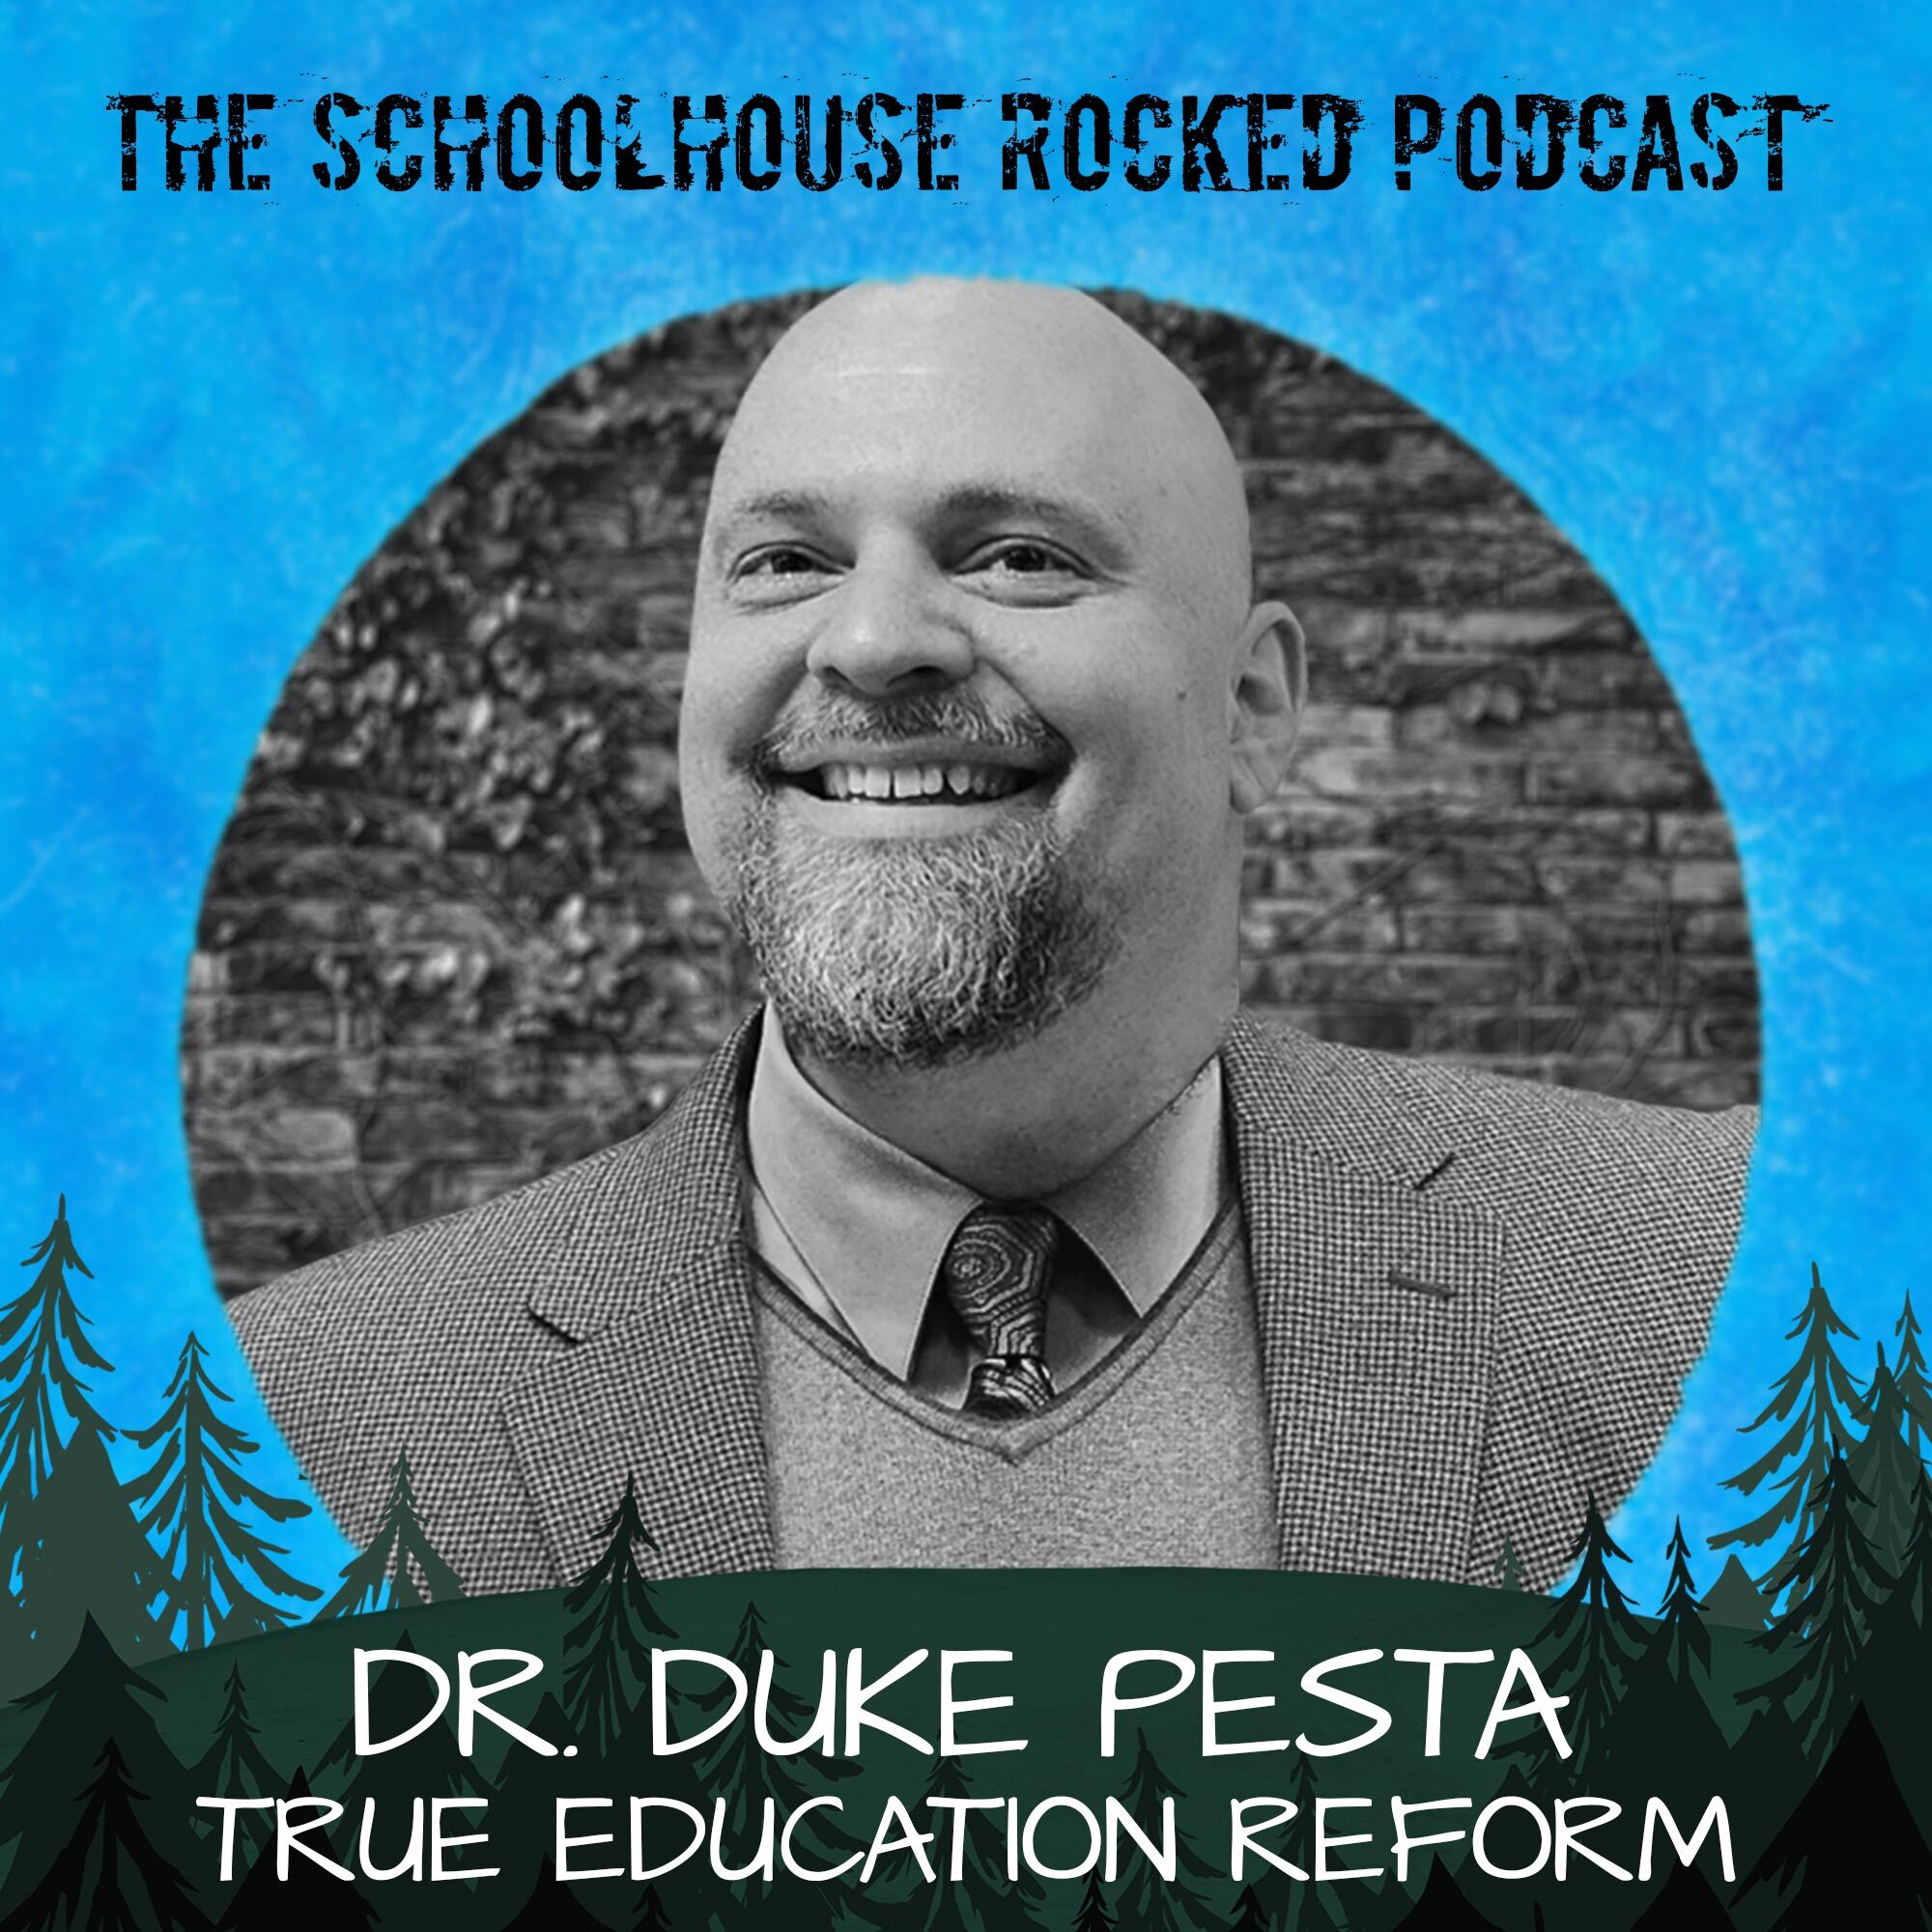 Dr. Duke Pesta - A University Professor’s Opinion on Homeschooling